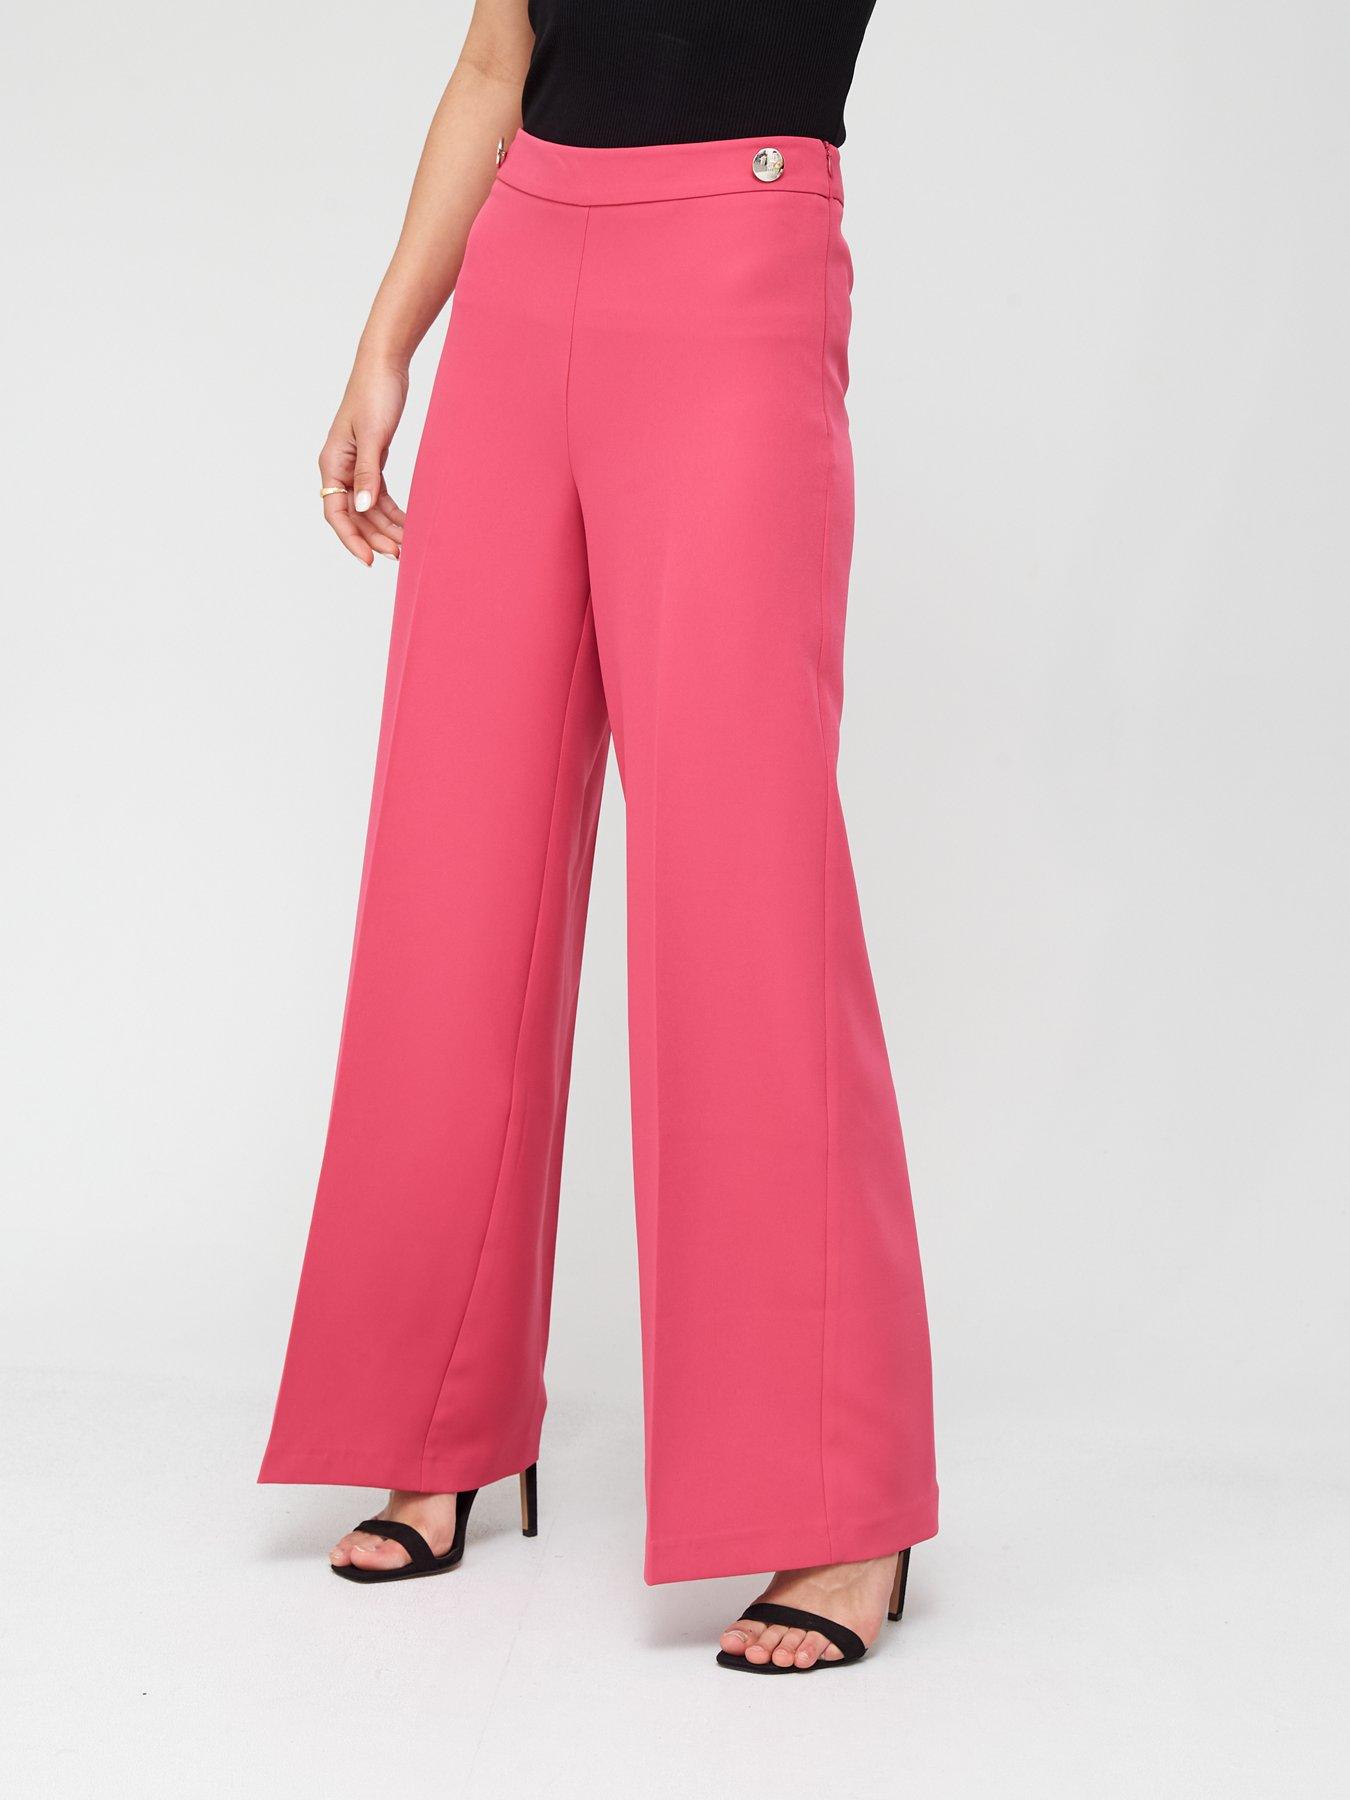 discount 97% Pink 11Y KIDS FASHION Trousers Sports Primark slacks 